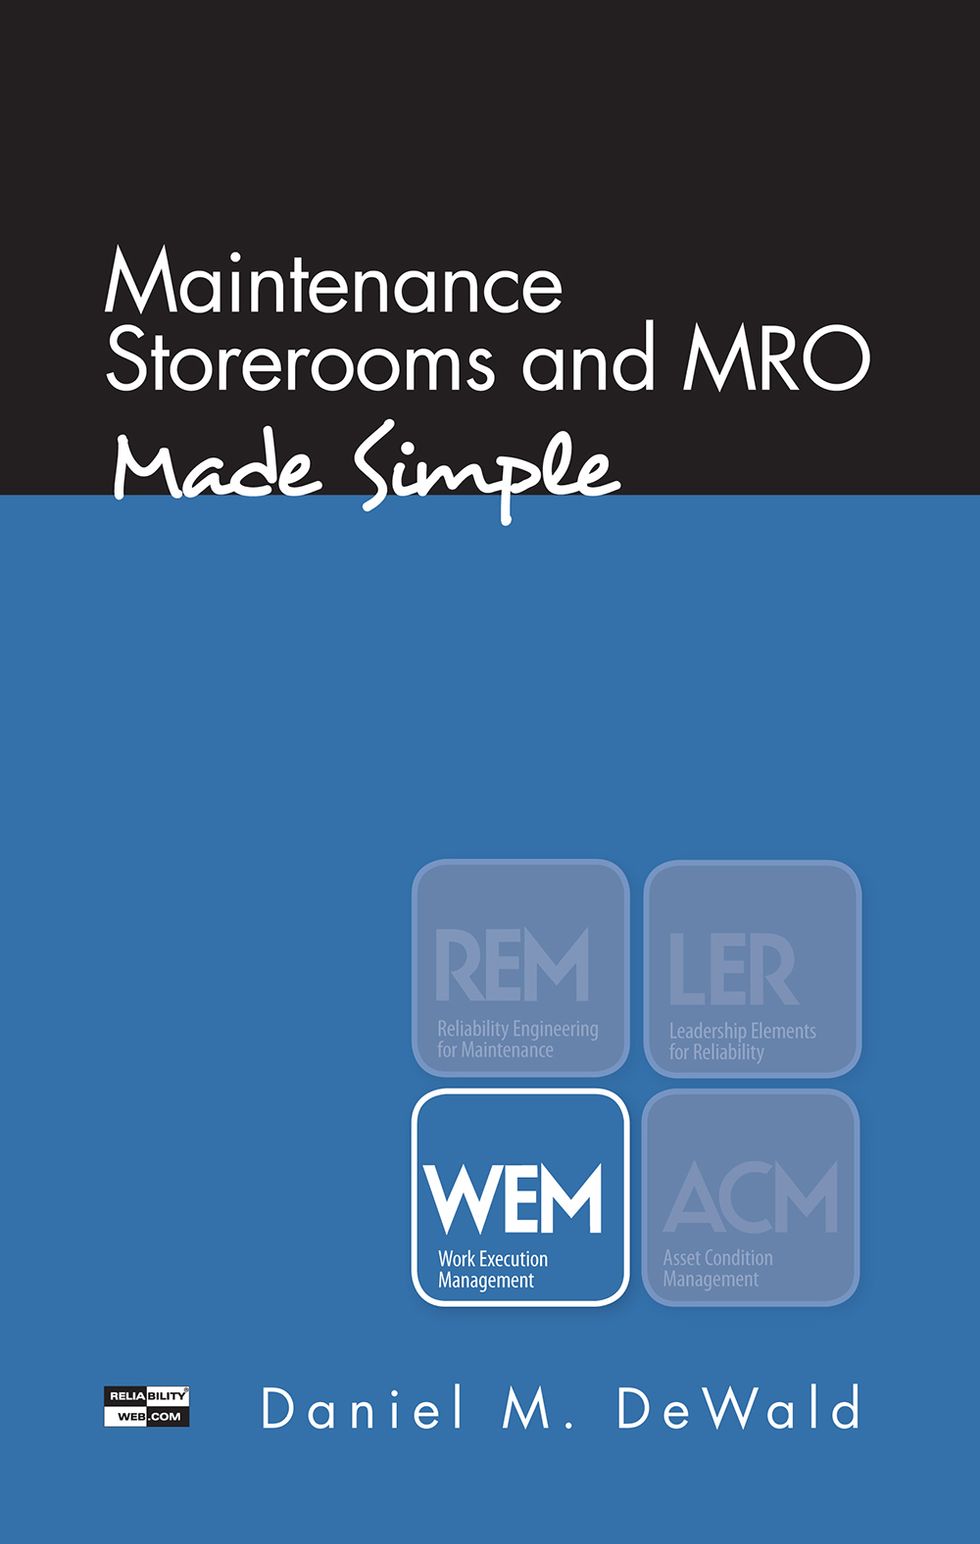  Maintenance Storerooms and MRO - Made Simple 